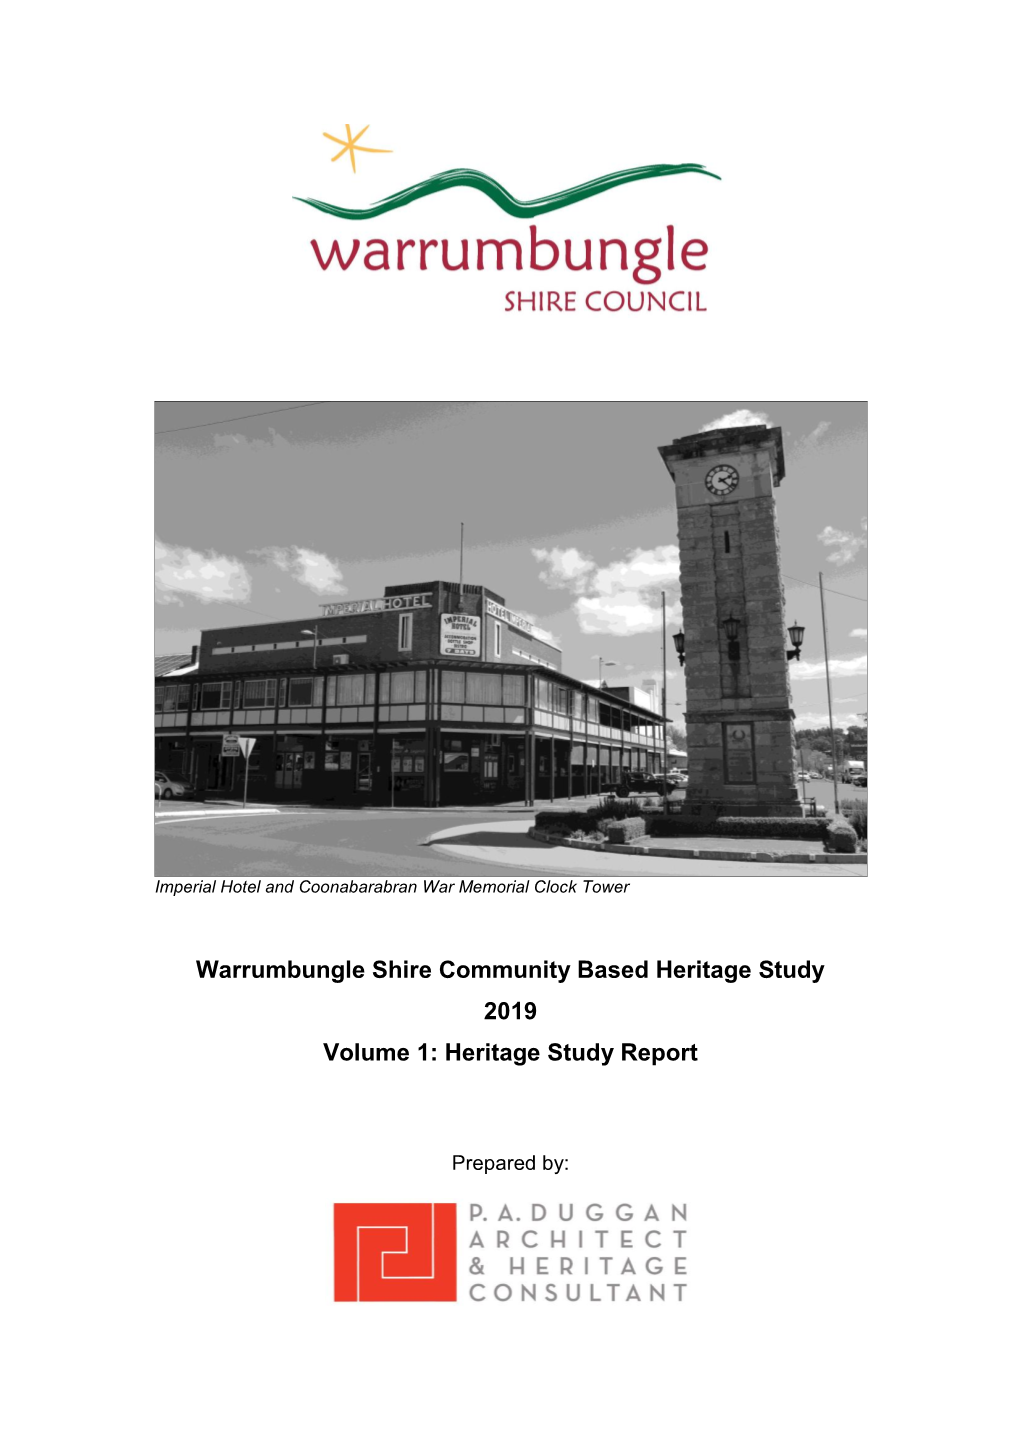 1. Warrumbungle Shire Community Based Heritage Study 2019